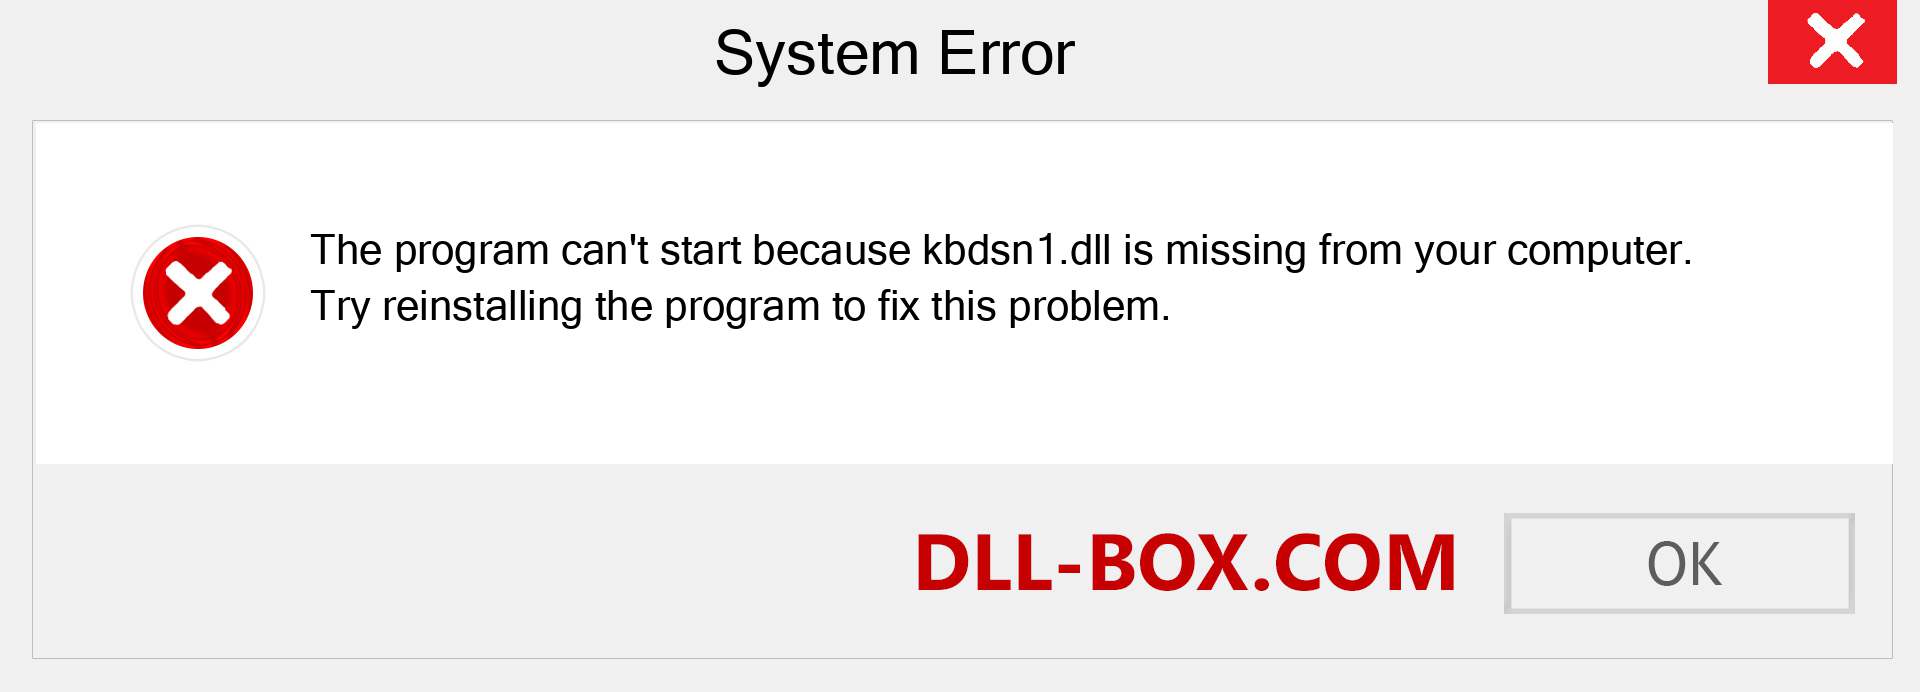  kbdsn1.dll file is missing?. Download for Windows 7, 8, 10 - Fix  kbdsn1 dll Missing Error on Windows, photos, images